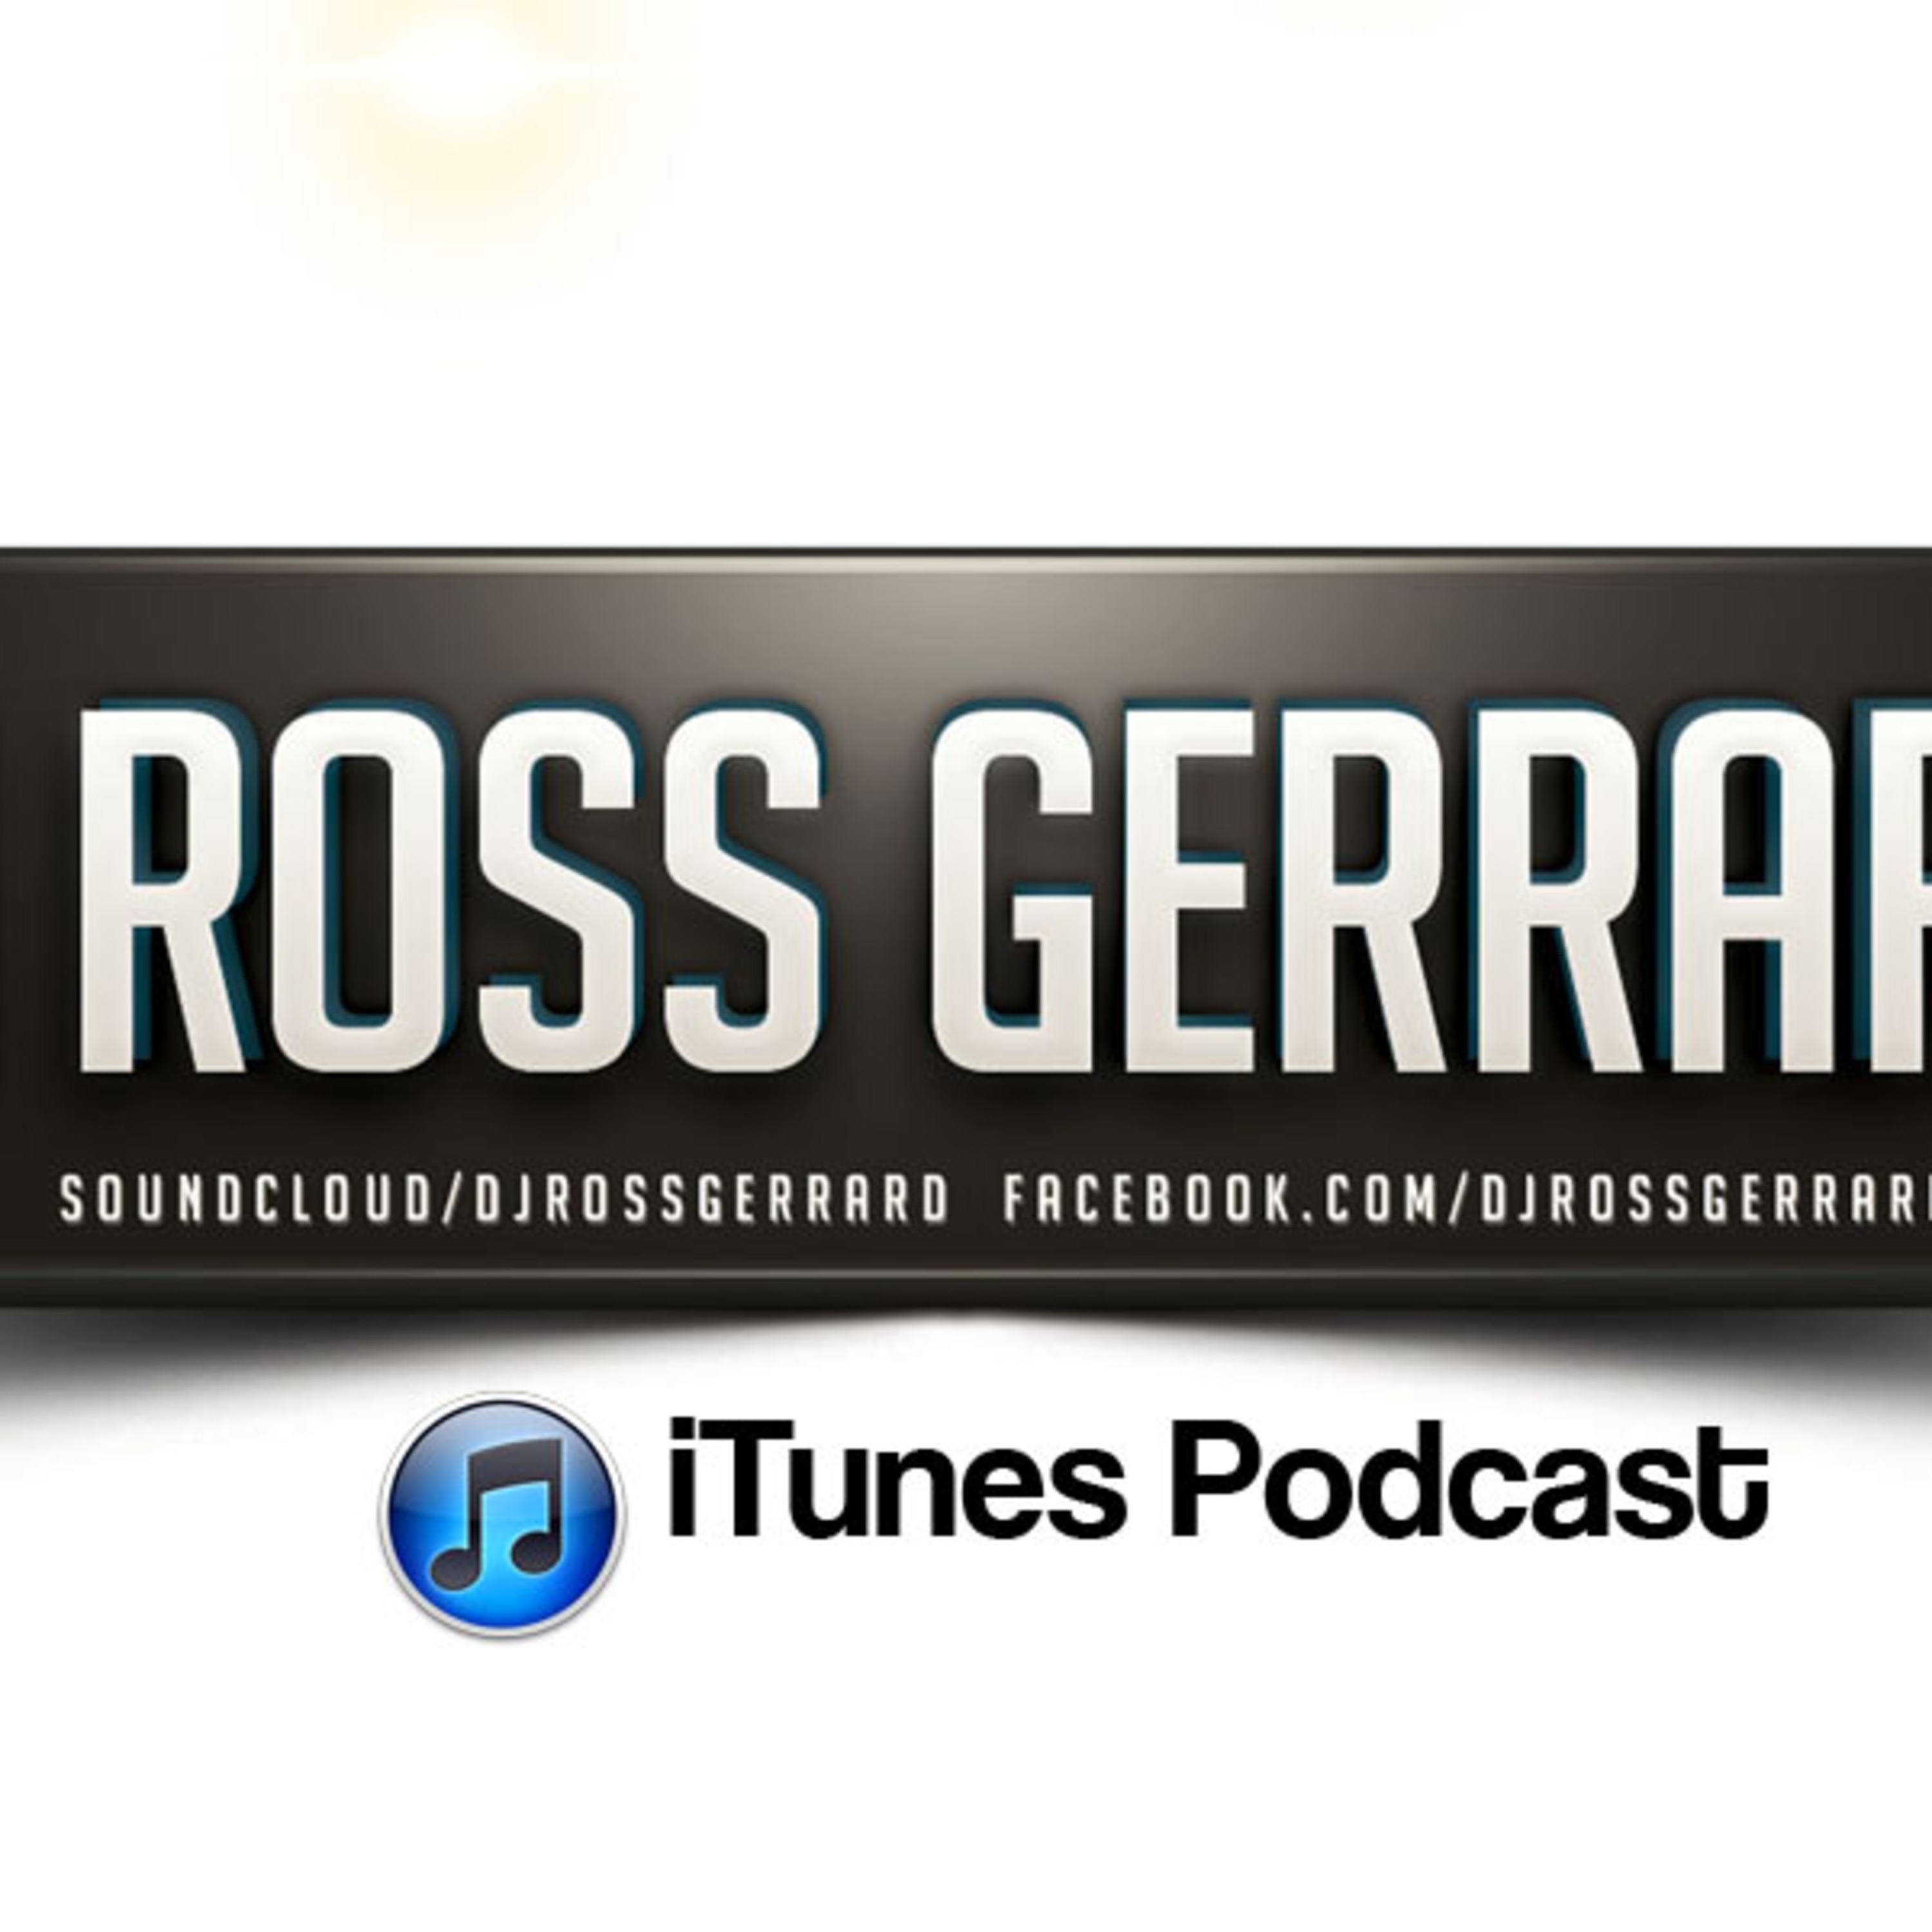 DJ Ross Gerrard's Podcast